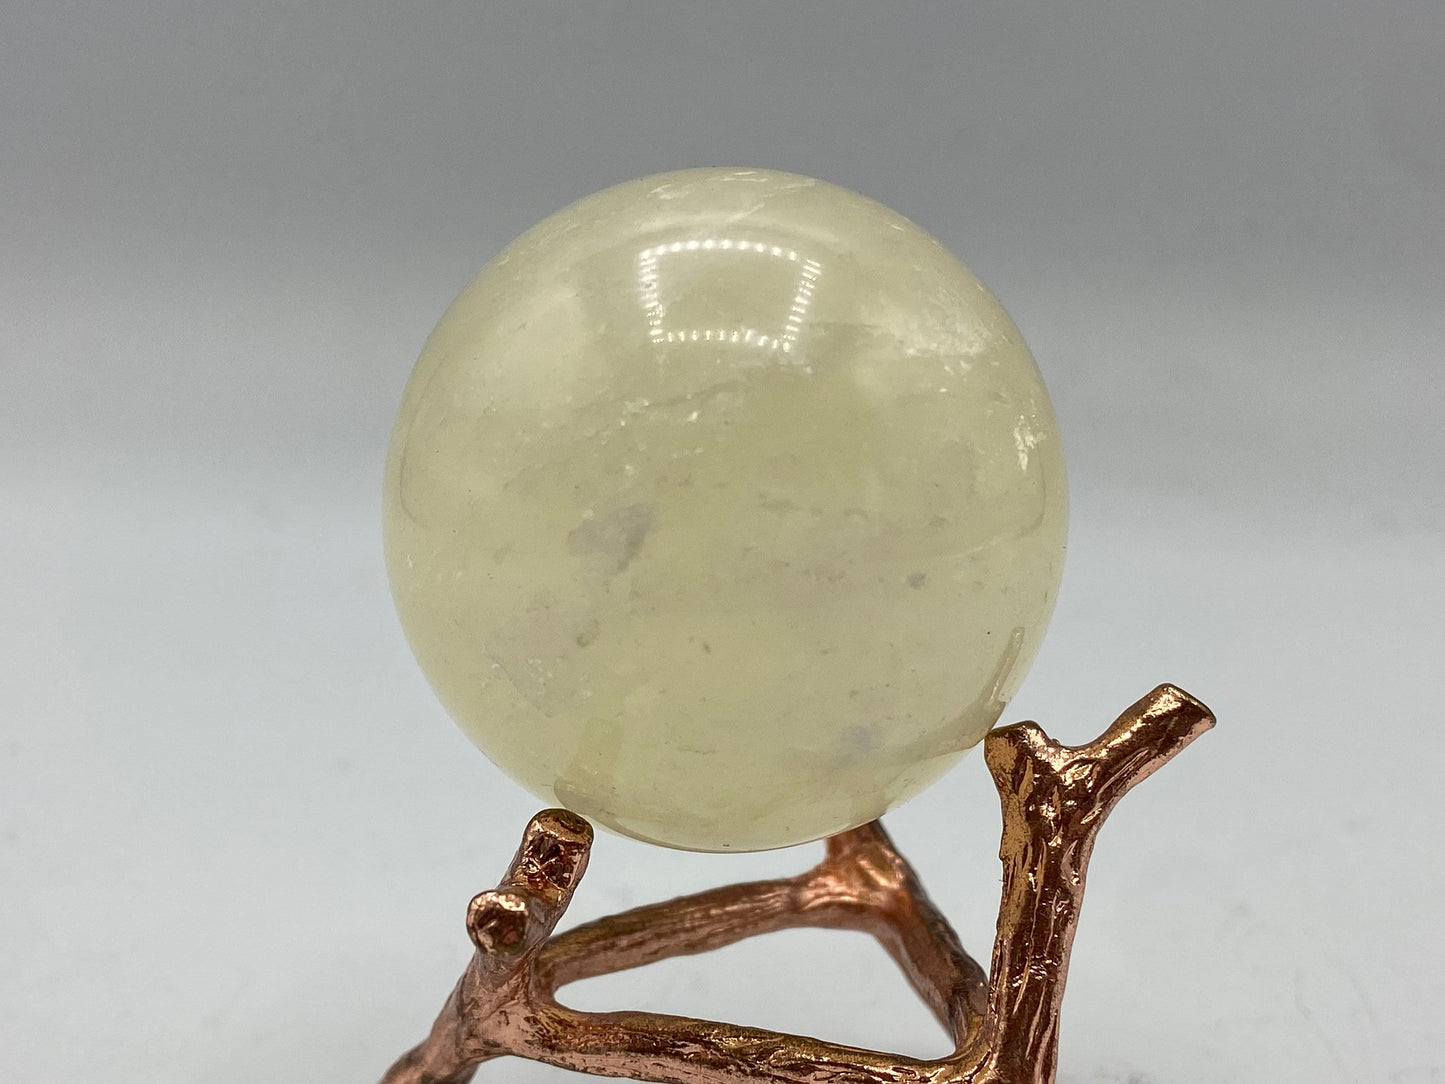 Yellow/lemon/cream calcite spheres with good flash,